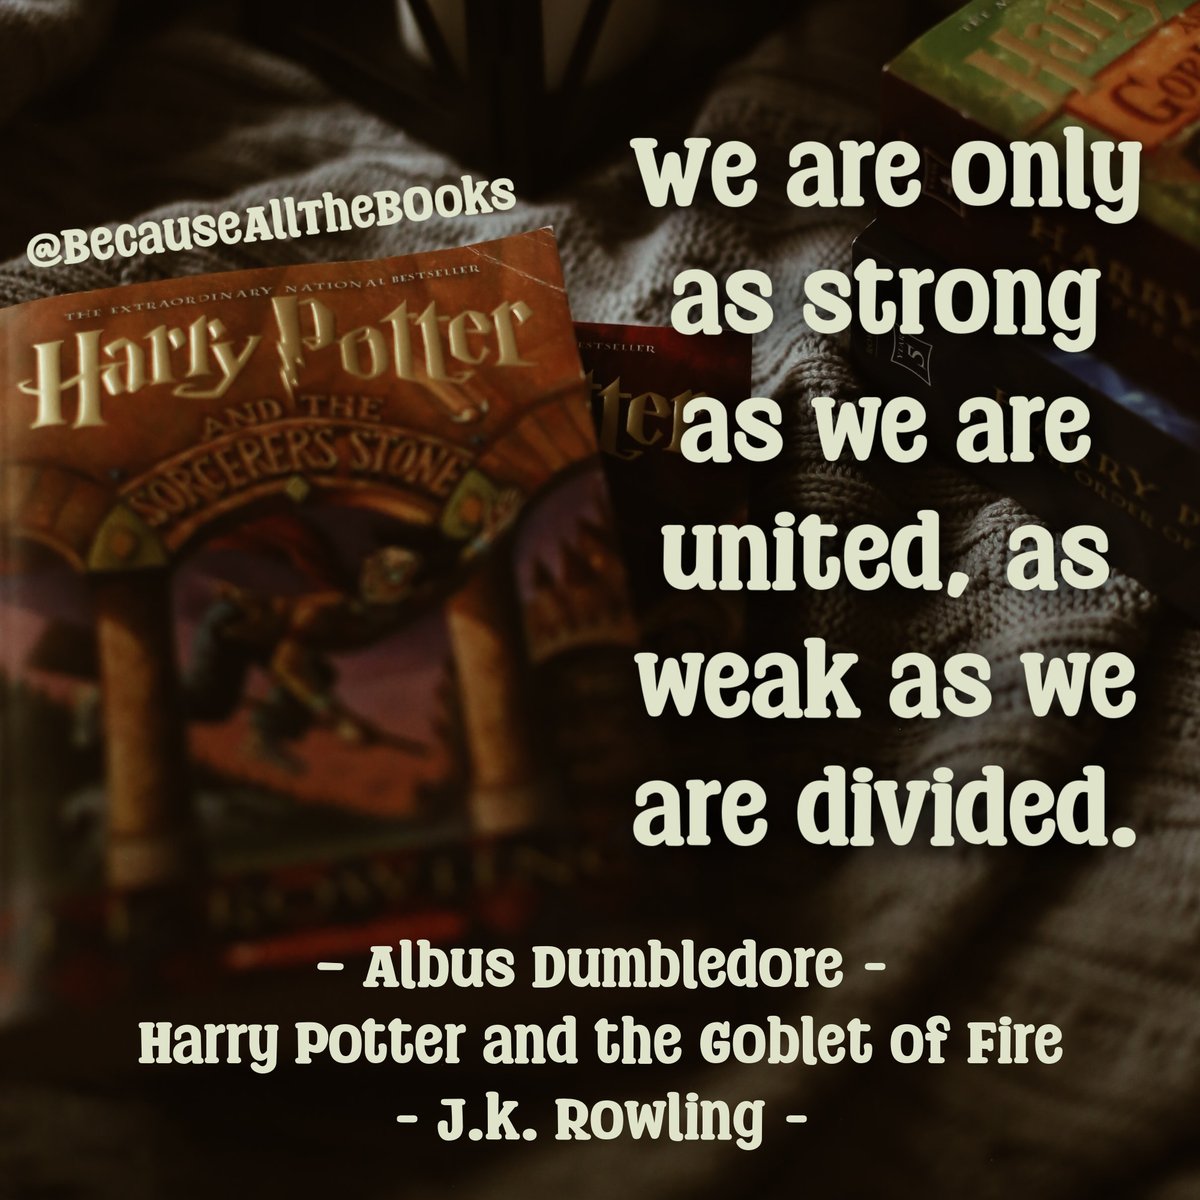 Words to ponder.

#BecauseAllTheBooks #BookVibes #ReadingBreak #ReadingIsMagic #BooksChangeLives #BookAdventure #BookEscape #BookishLife #BookMagic #BooksAndBeyond #BooksAreMagic #BookTravel #ReadingAdventures #HarryPotter #Always #DumbledoreQuotes